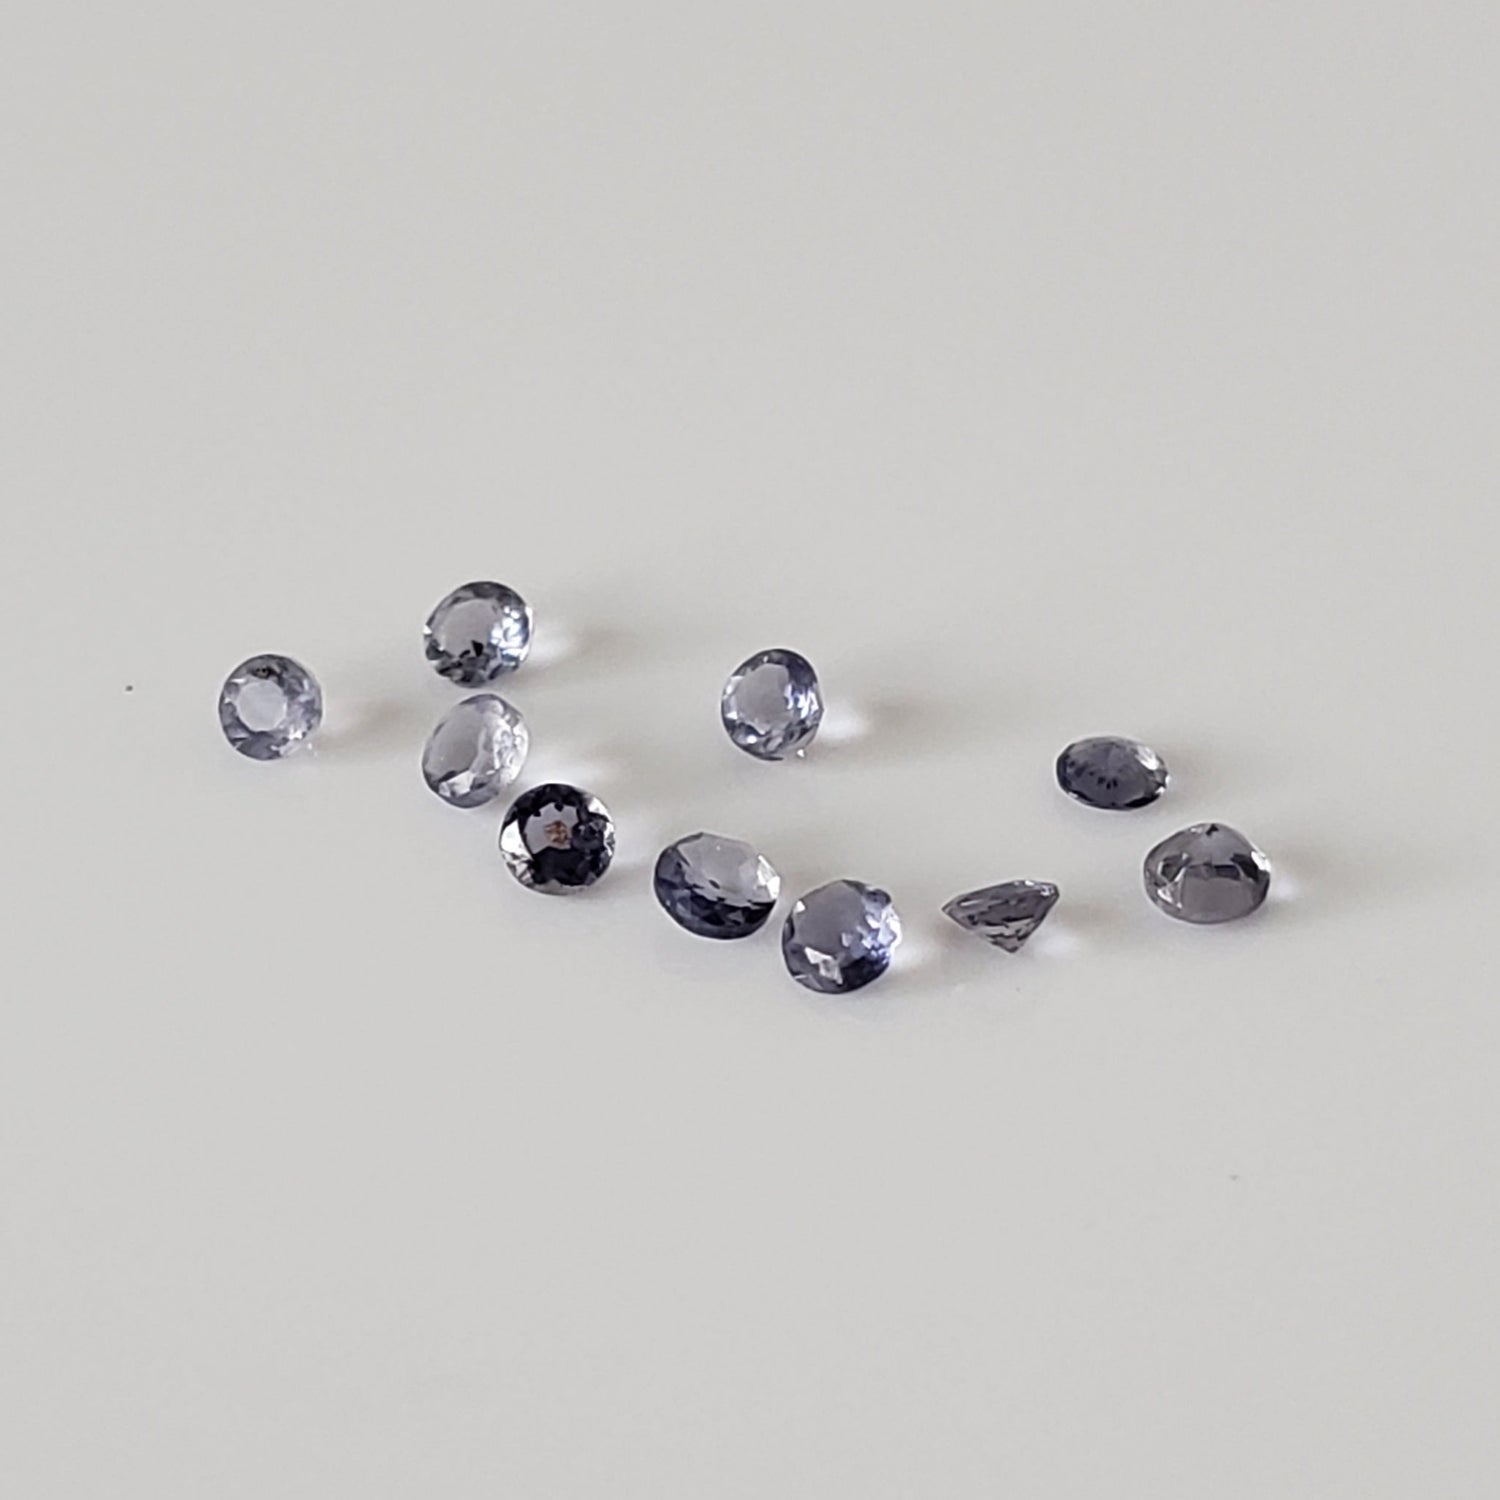 Iolite | 10 Piece Gemstone Lot | Round Cut | Blue Purple | 1.3-1.5mm 0.13tcw